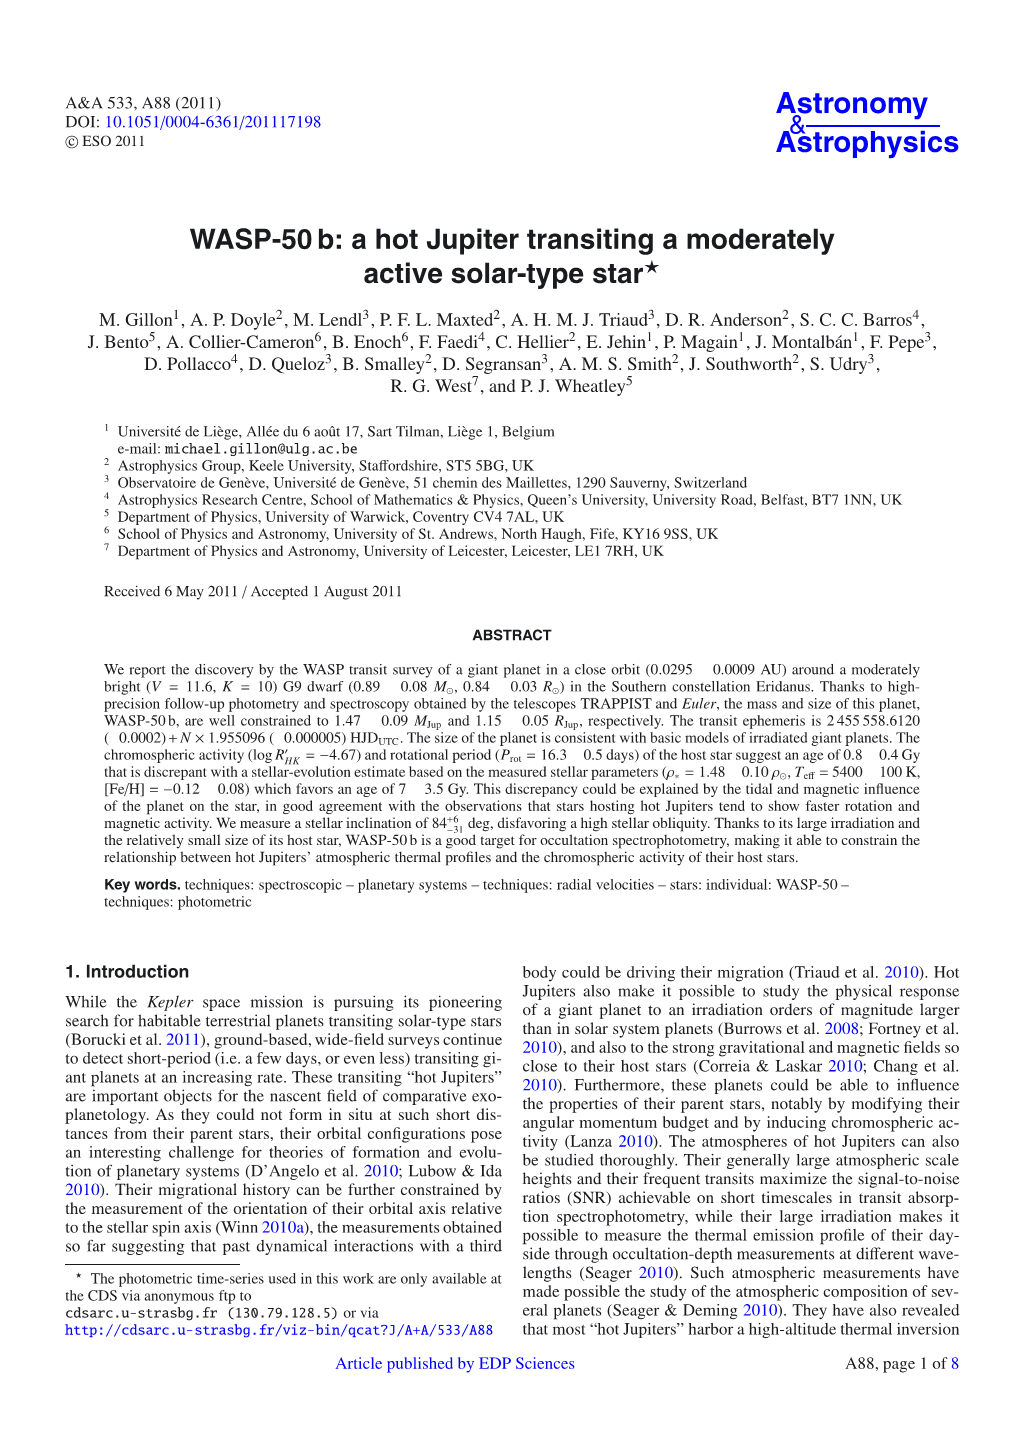 WASP-50 B: a Hot Jupiter Transiting a Moderately Active Solar-Type Star